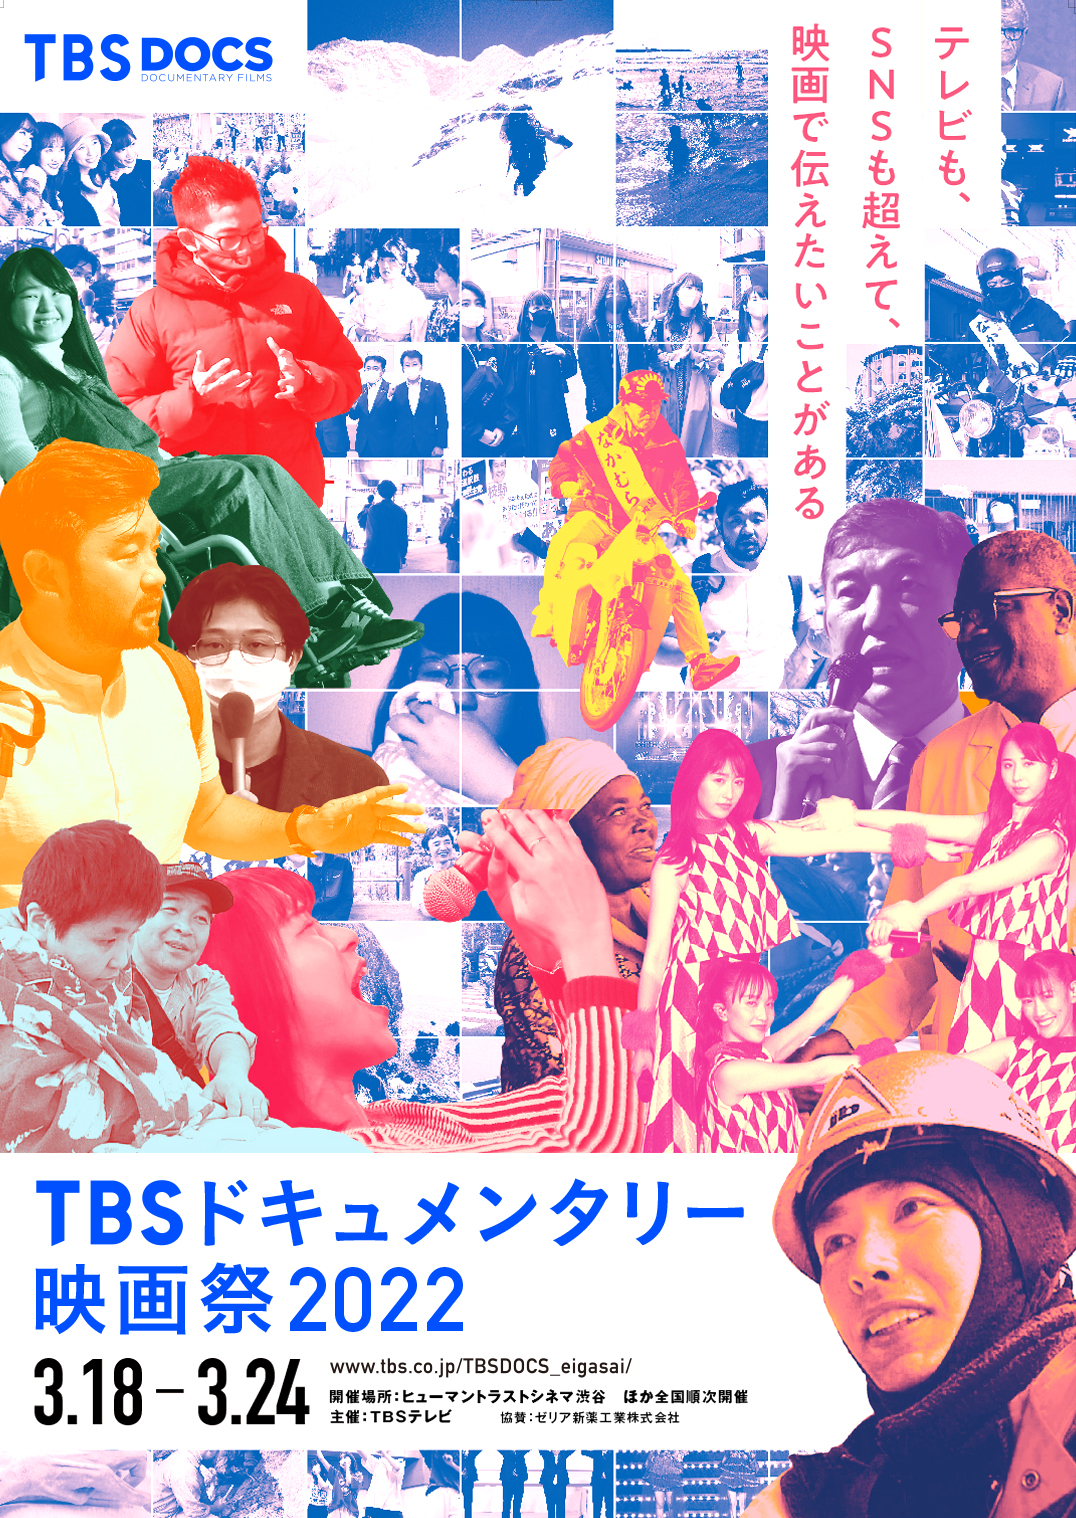 「TBSドキュメンタリー映画祭 2022」